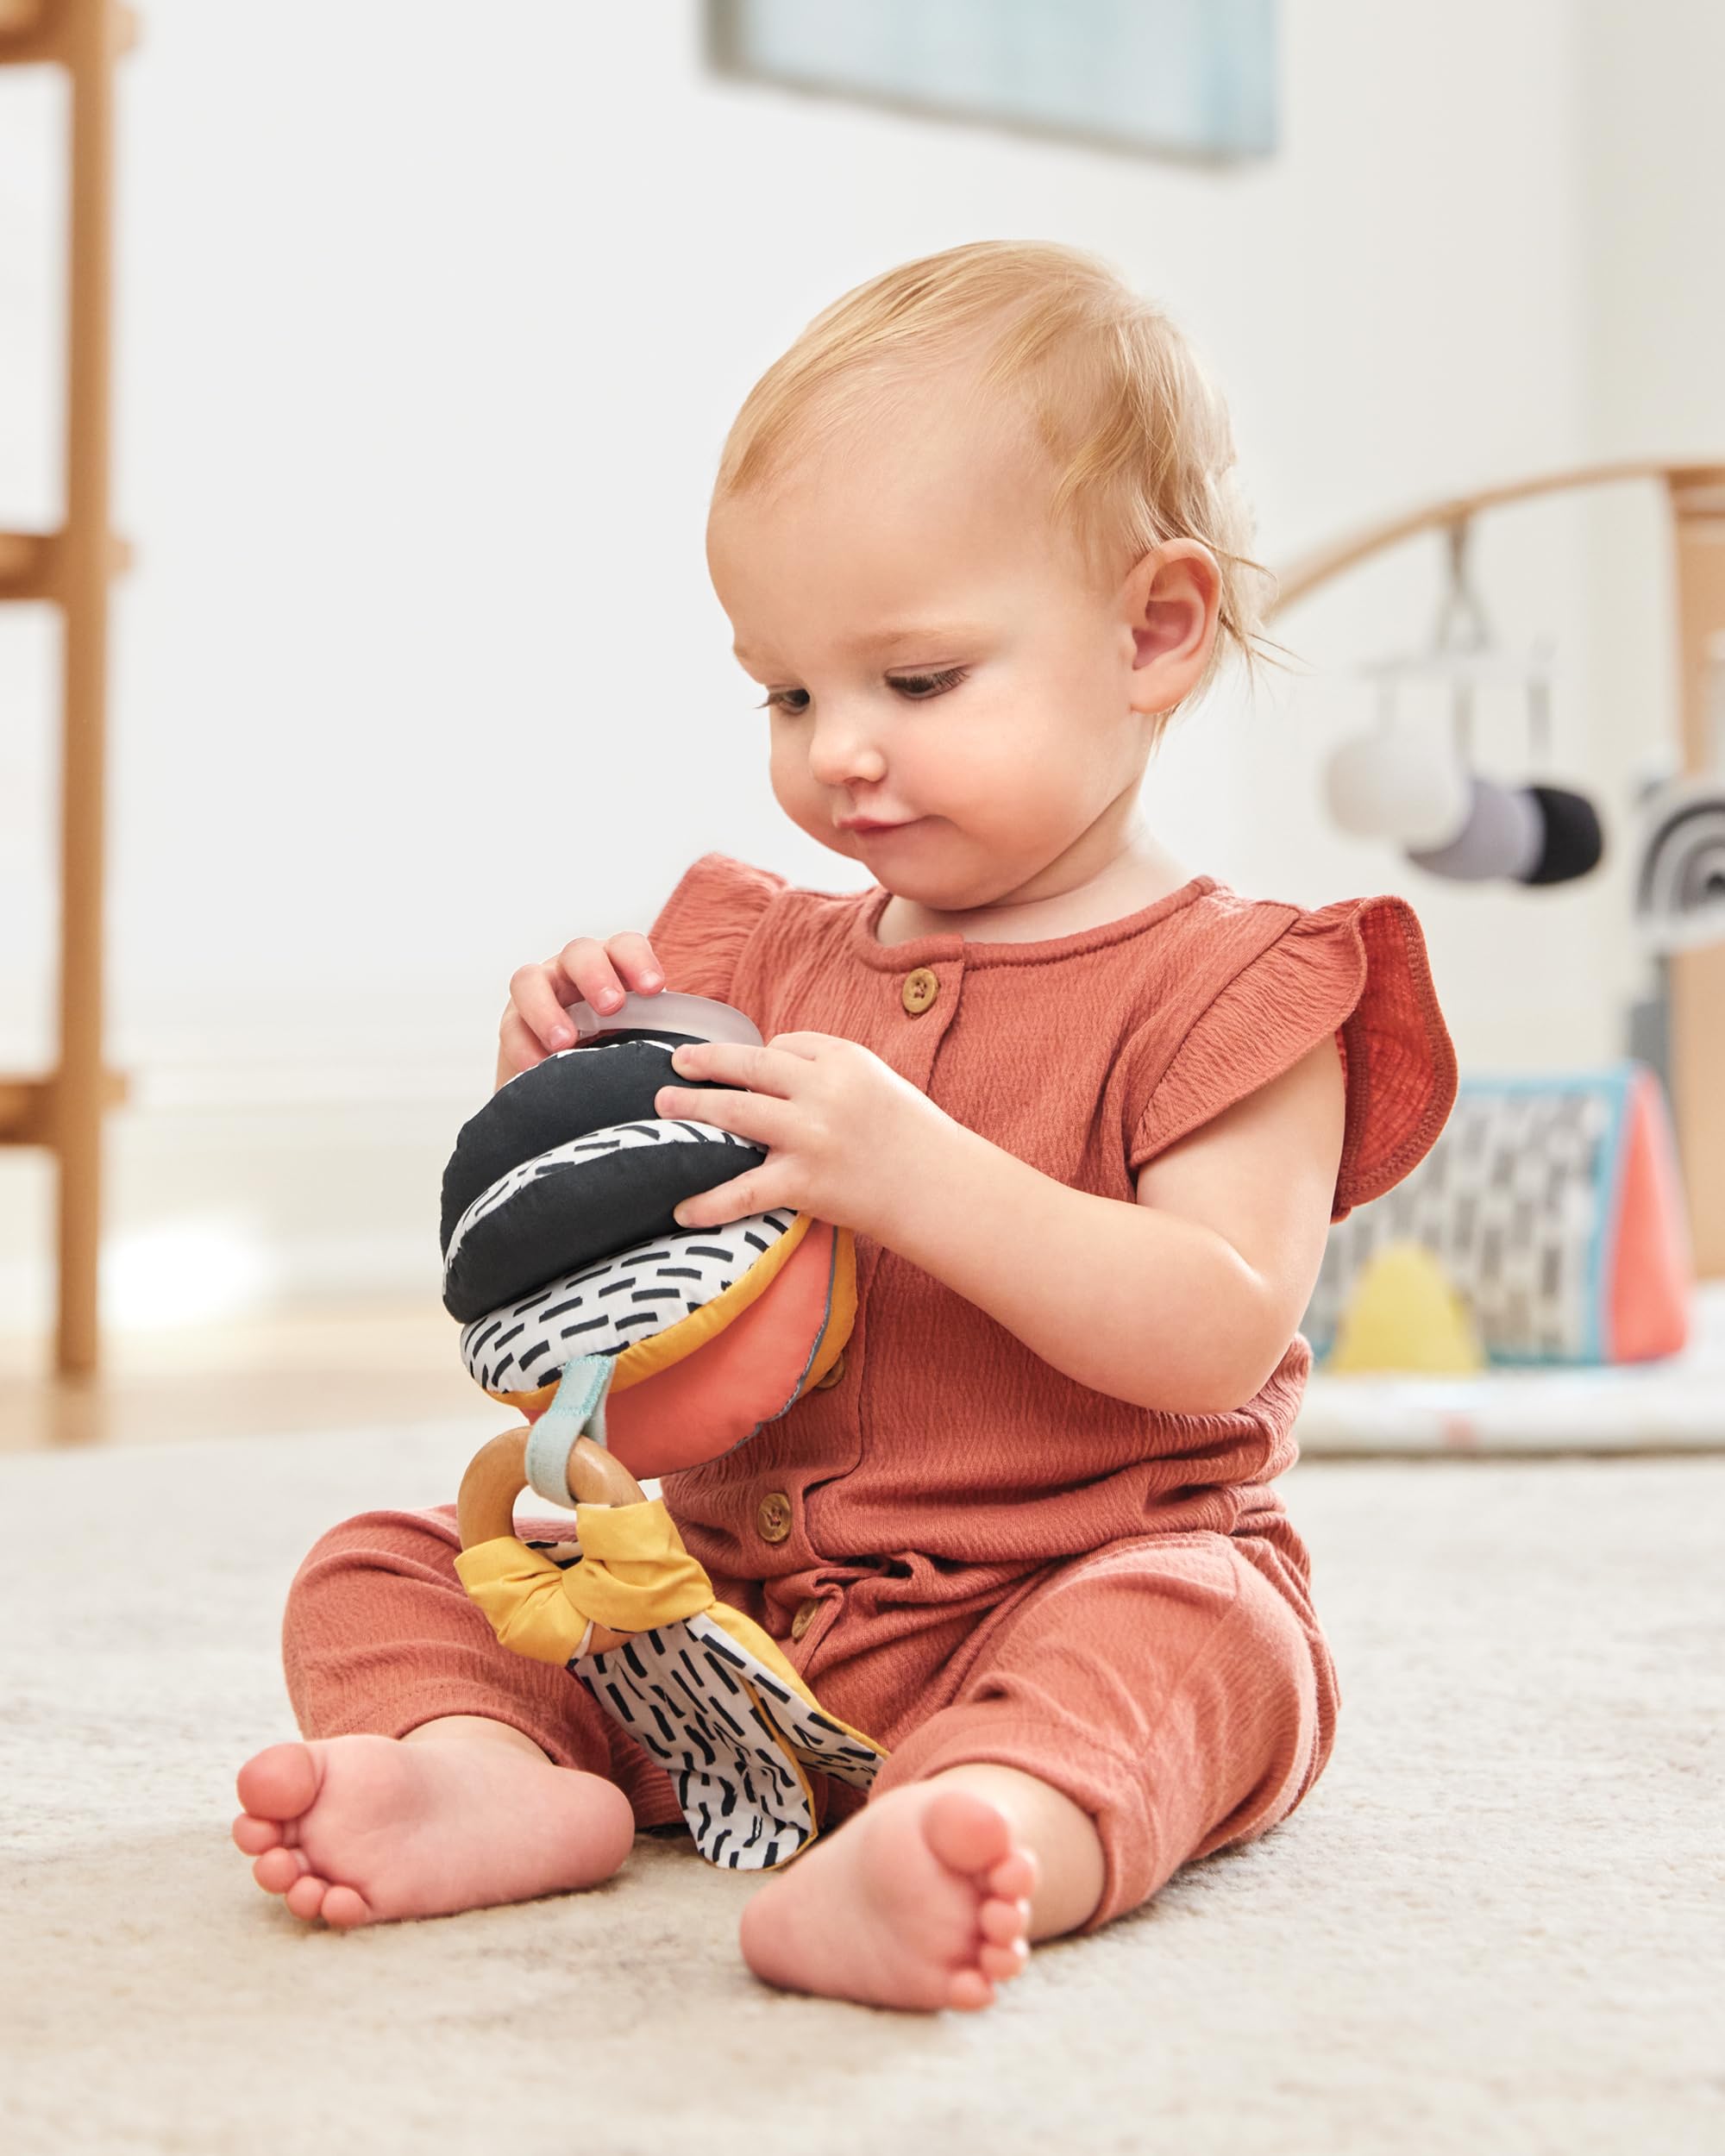 Skip Hop 3-in-1 Baby Activity & Teether Stroller Toy, Montessori Inspired 3-in-1 Stroller Toy